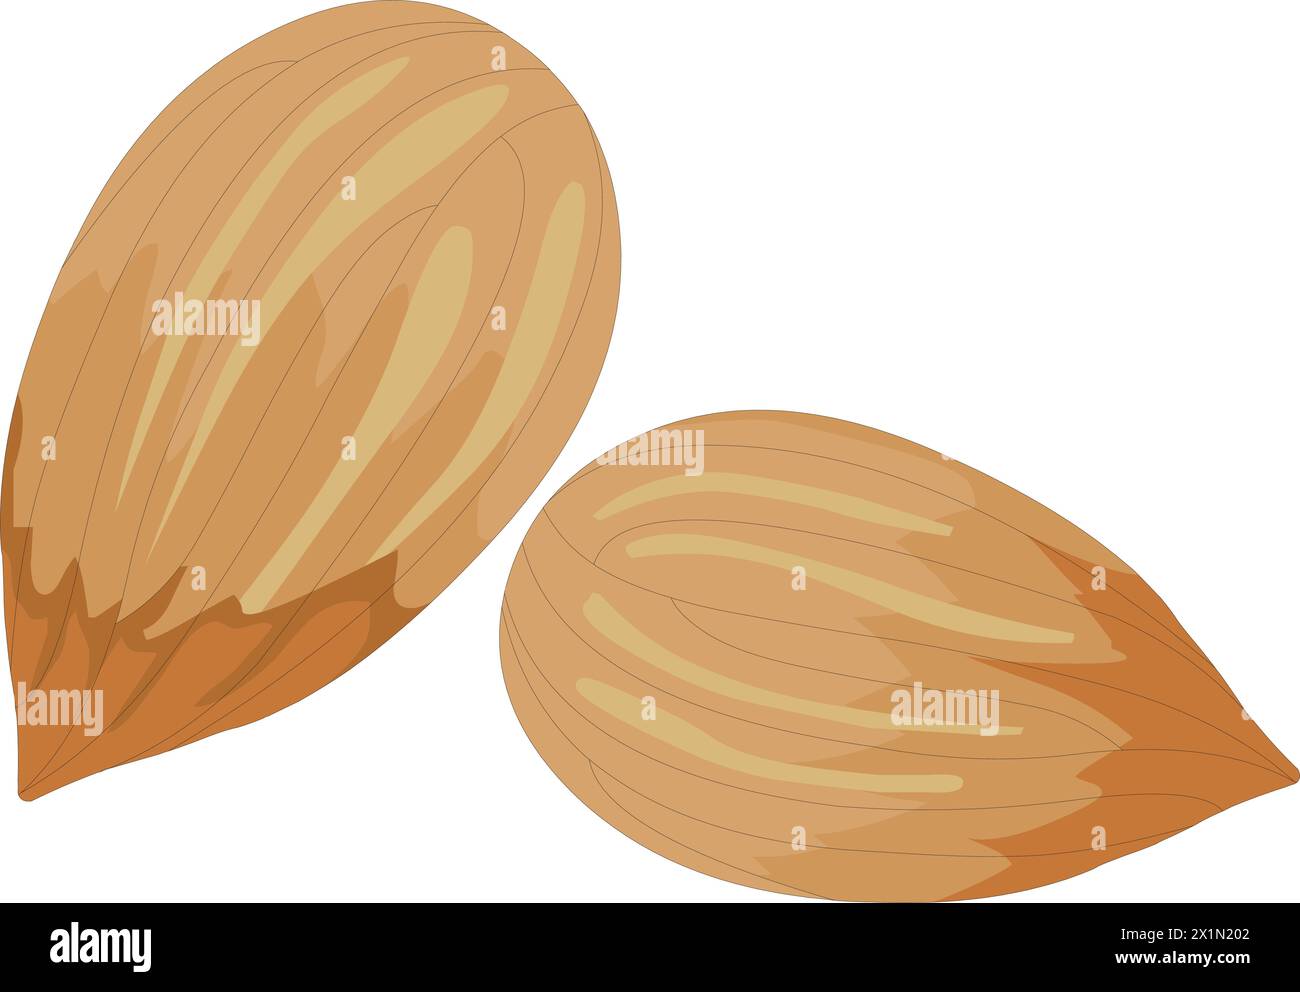 Almonds vector illustration Stock Vector